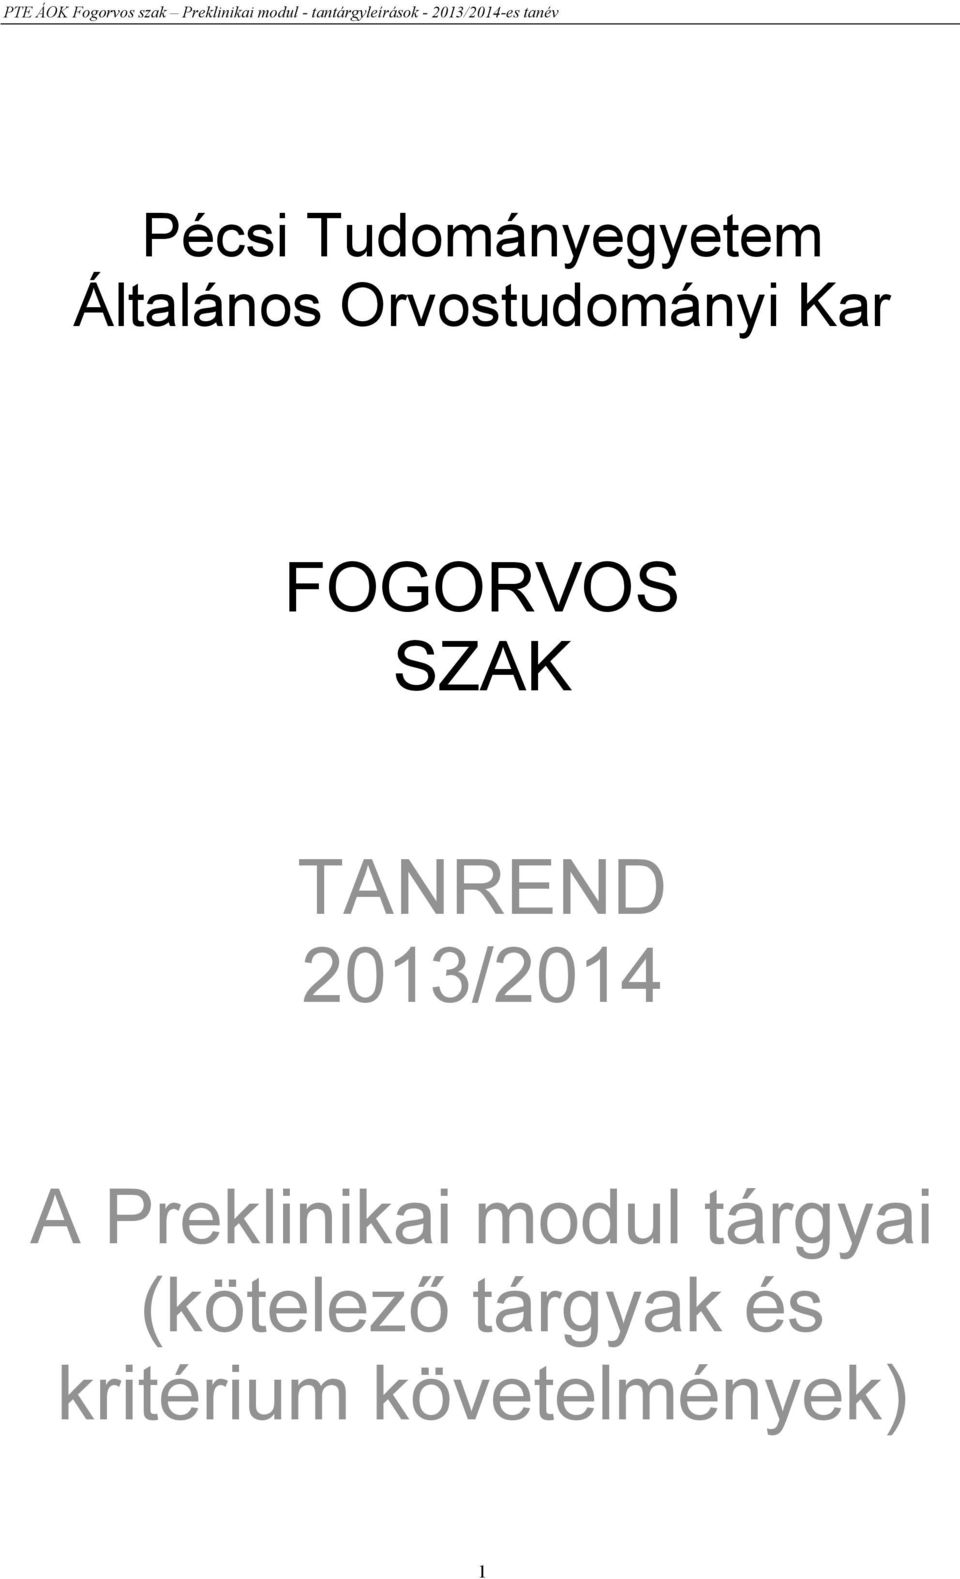 TANREND 2013/2014 A Preklinikai modul